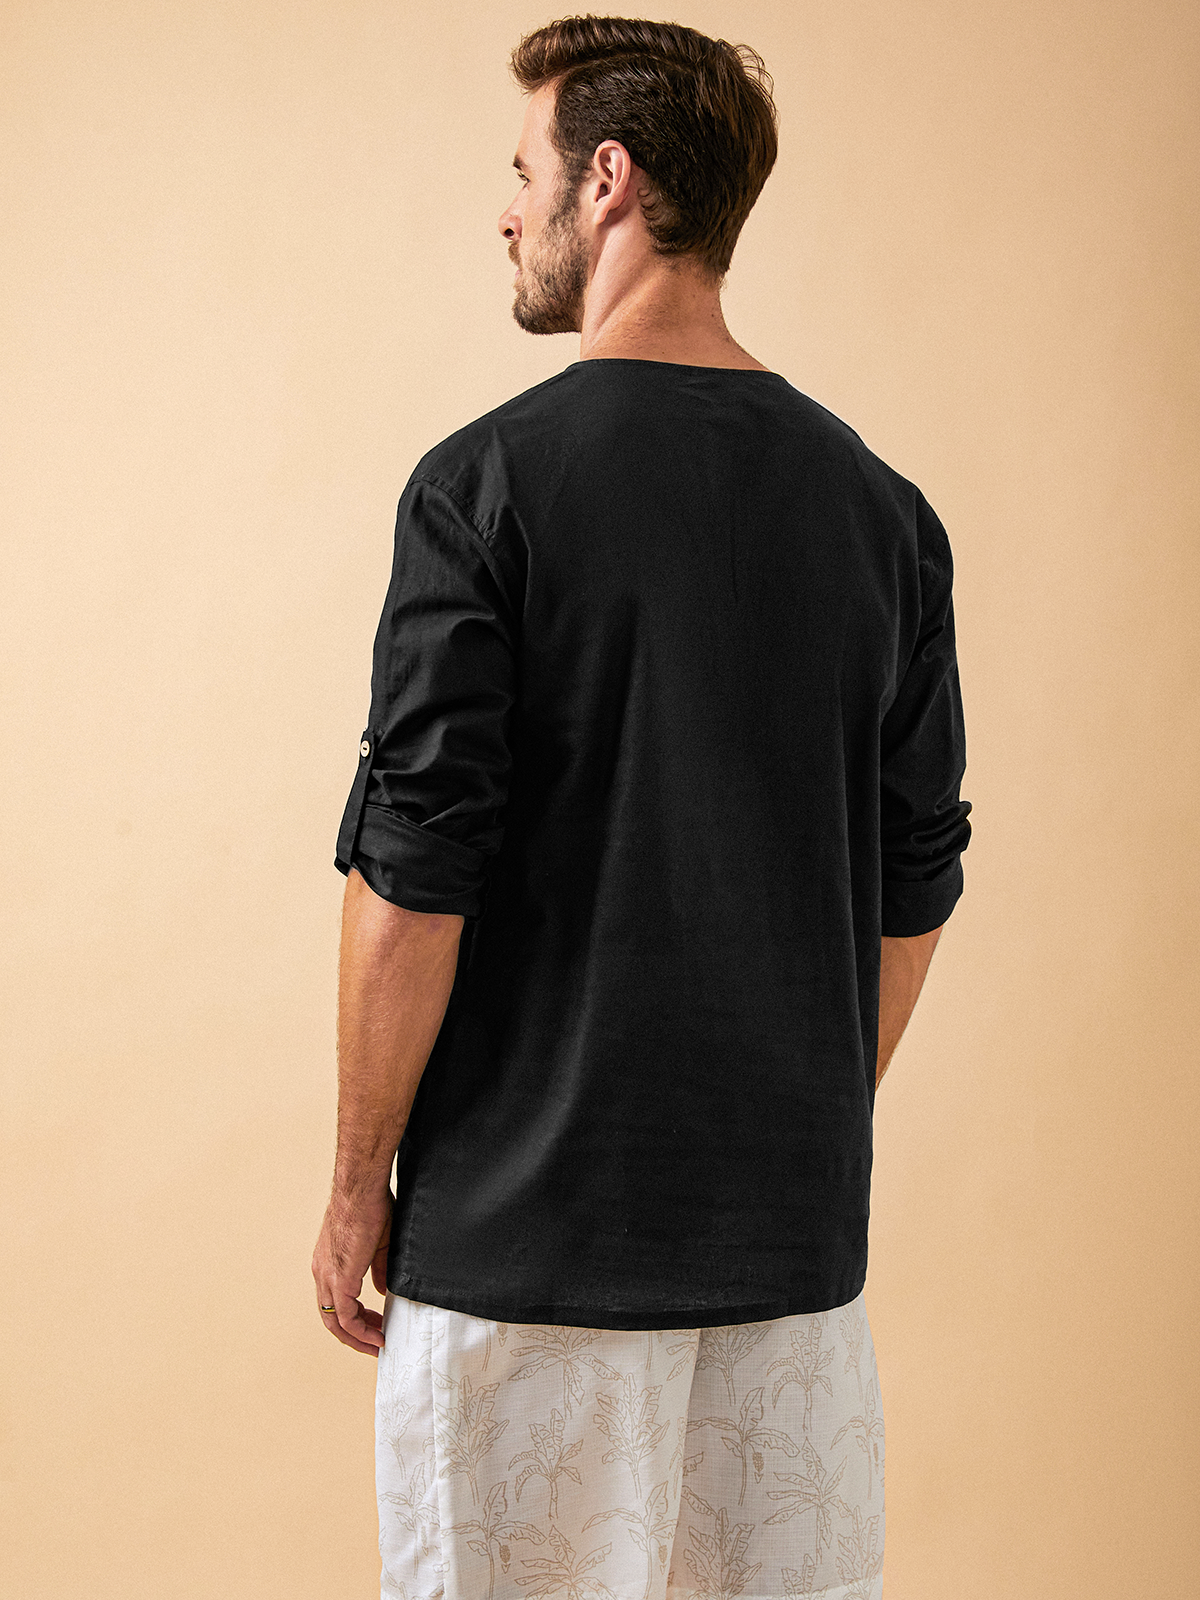 Hardaddy Plain Cotton Chest Pocket Long Sleeve Casual Shirt